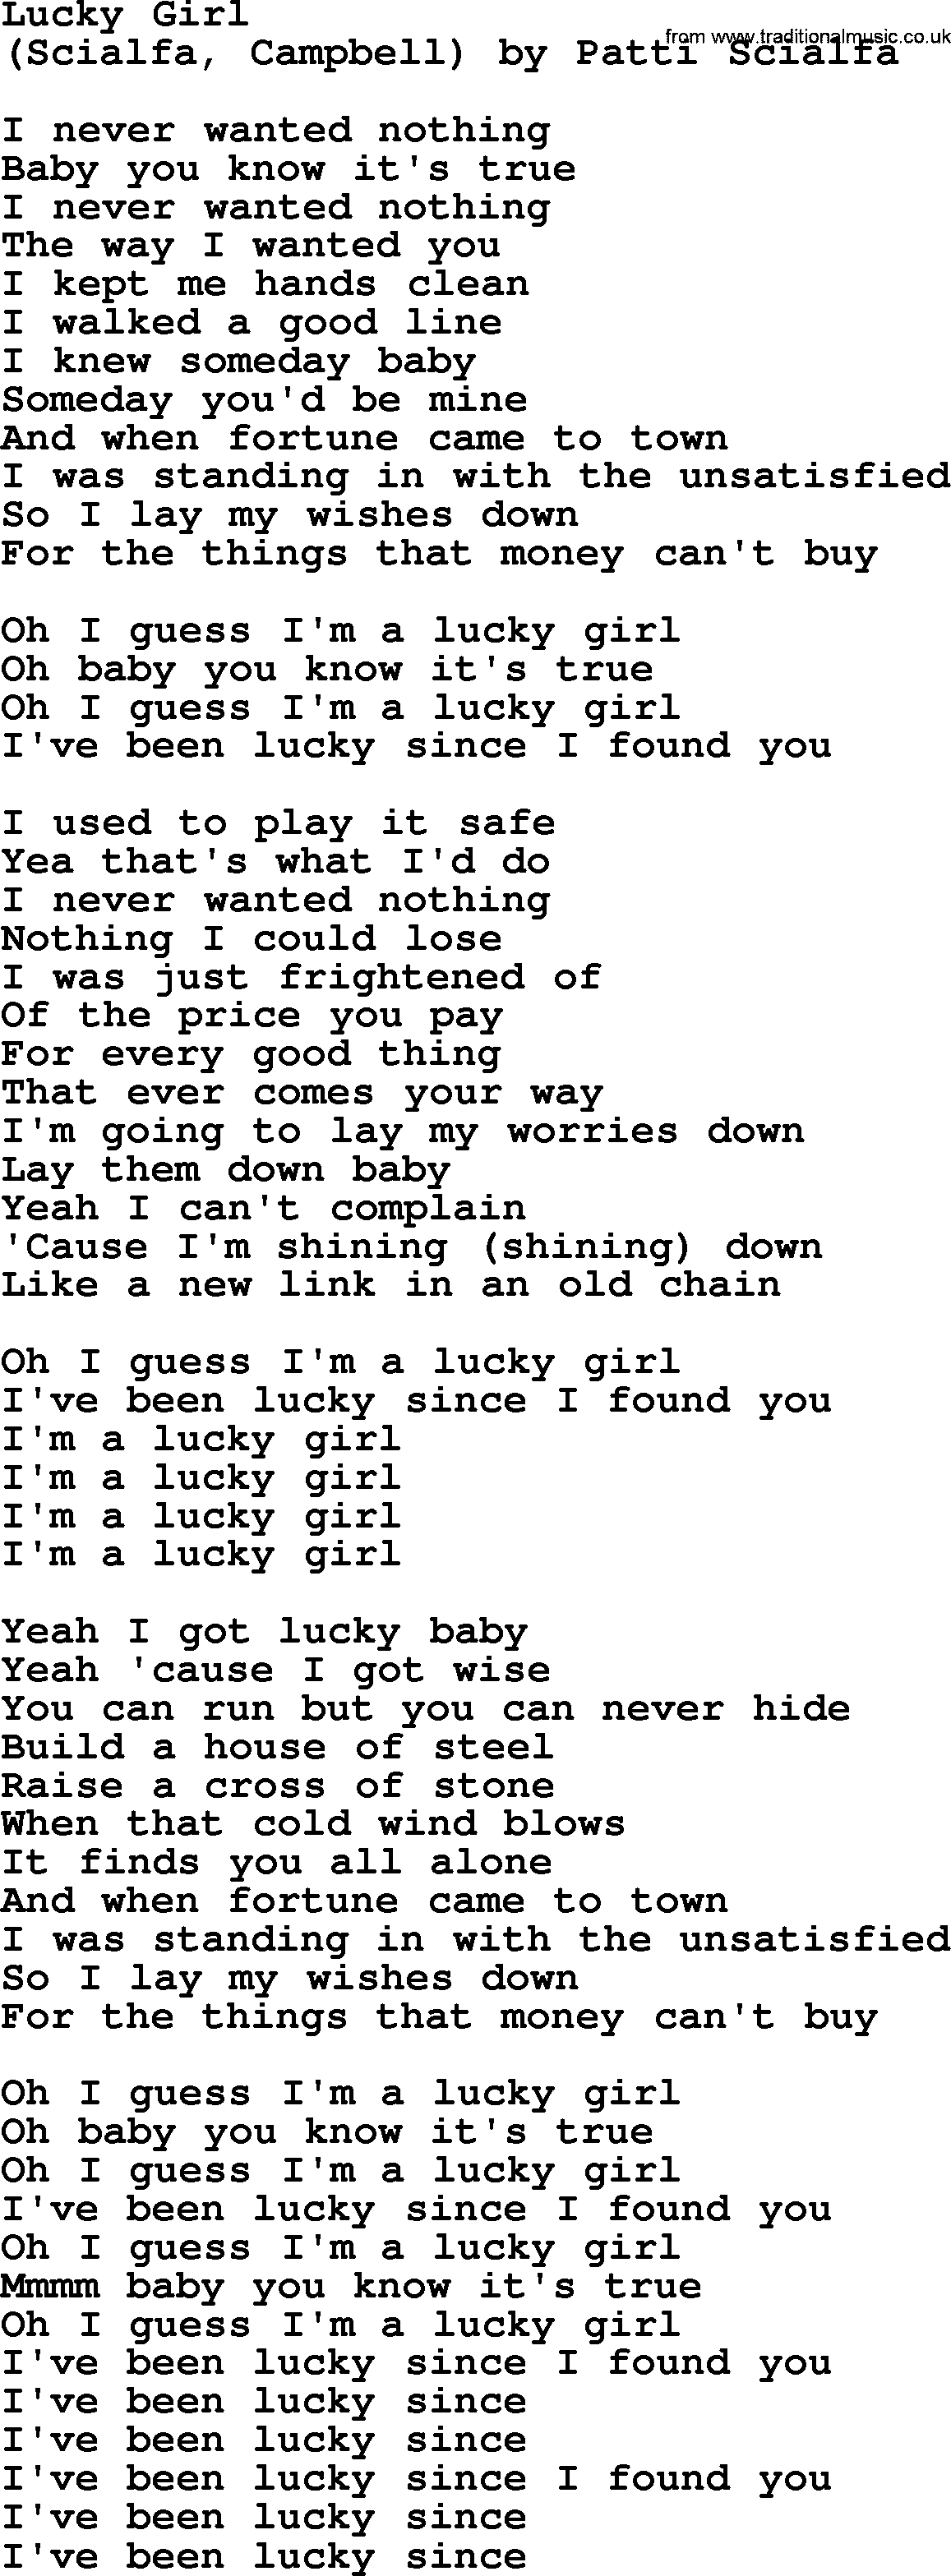 Bruce Springsteen song: Lucky Girl lyrics